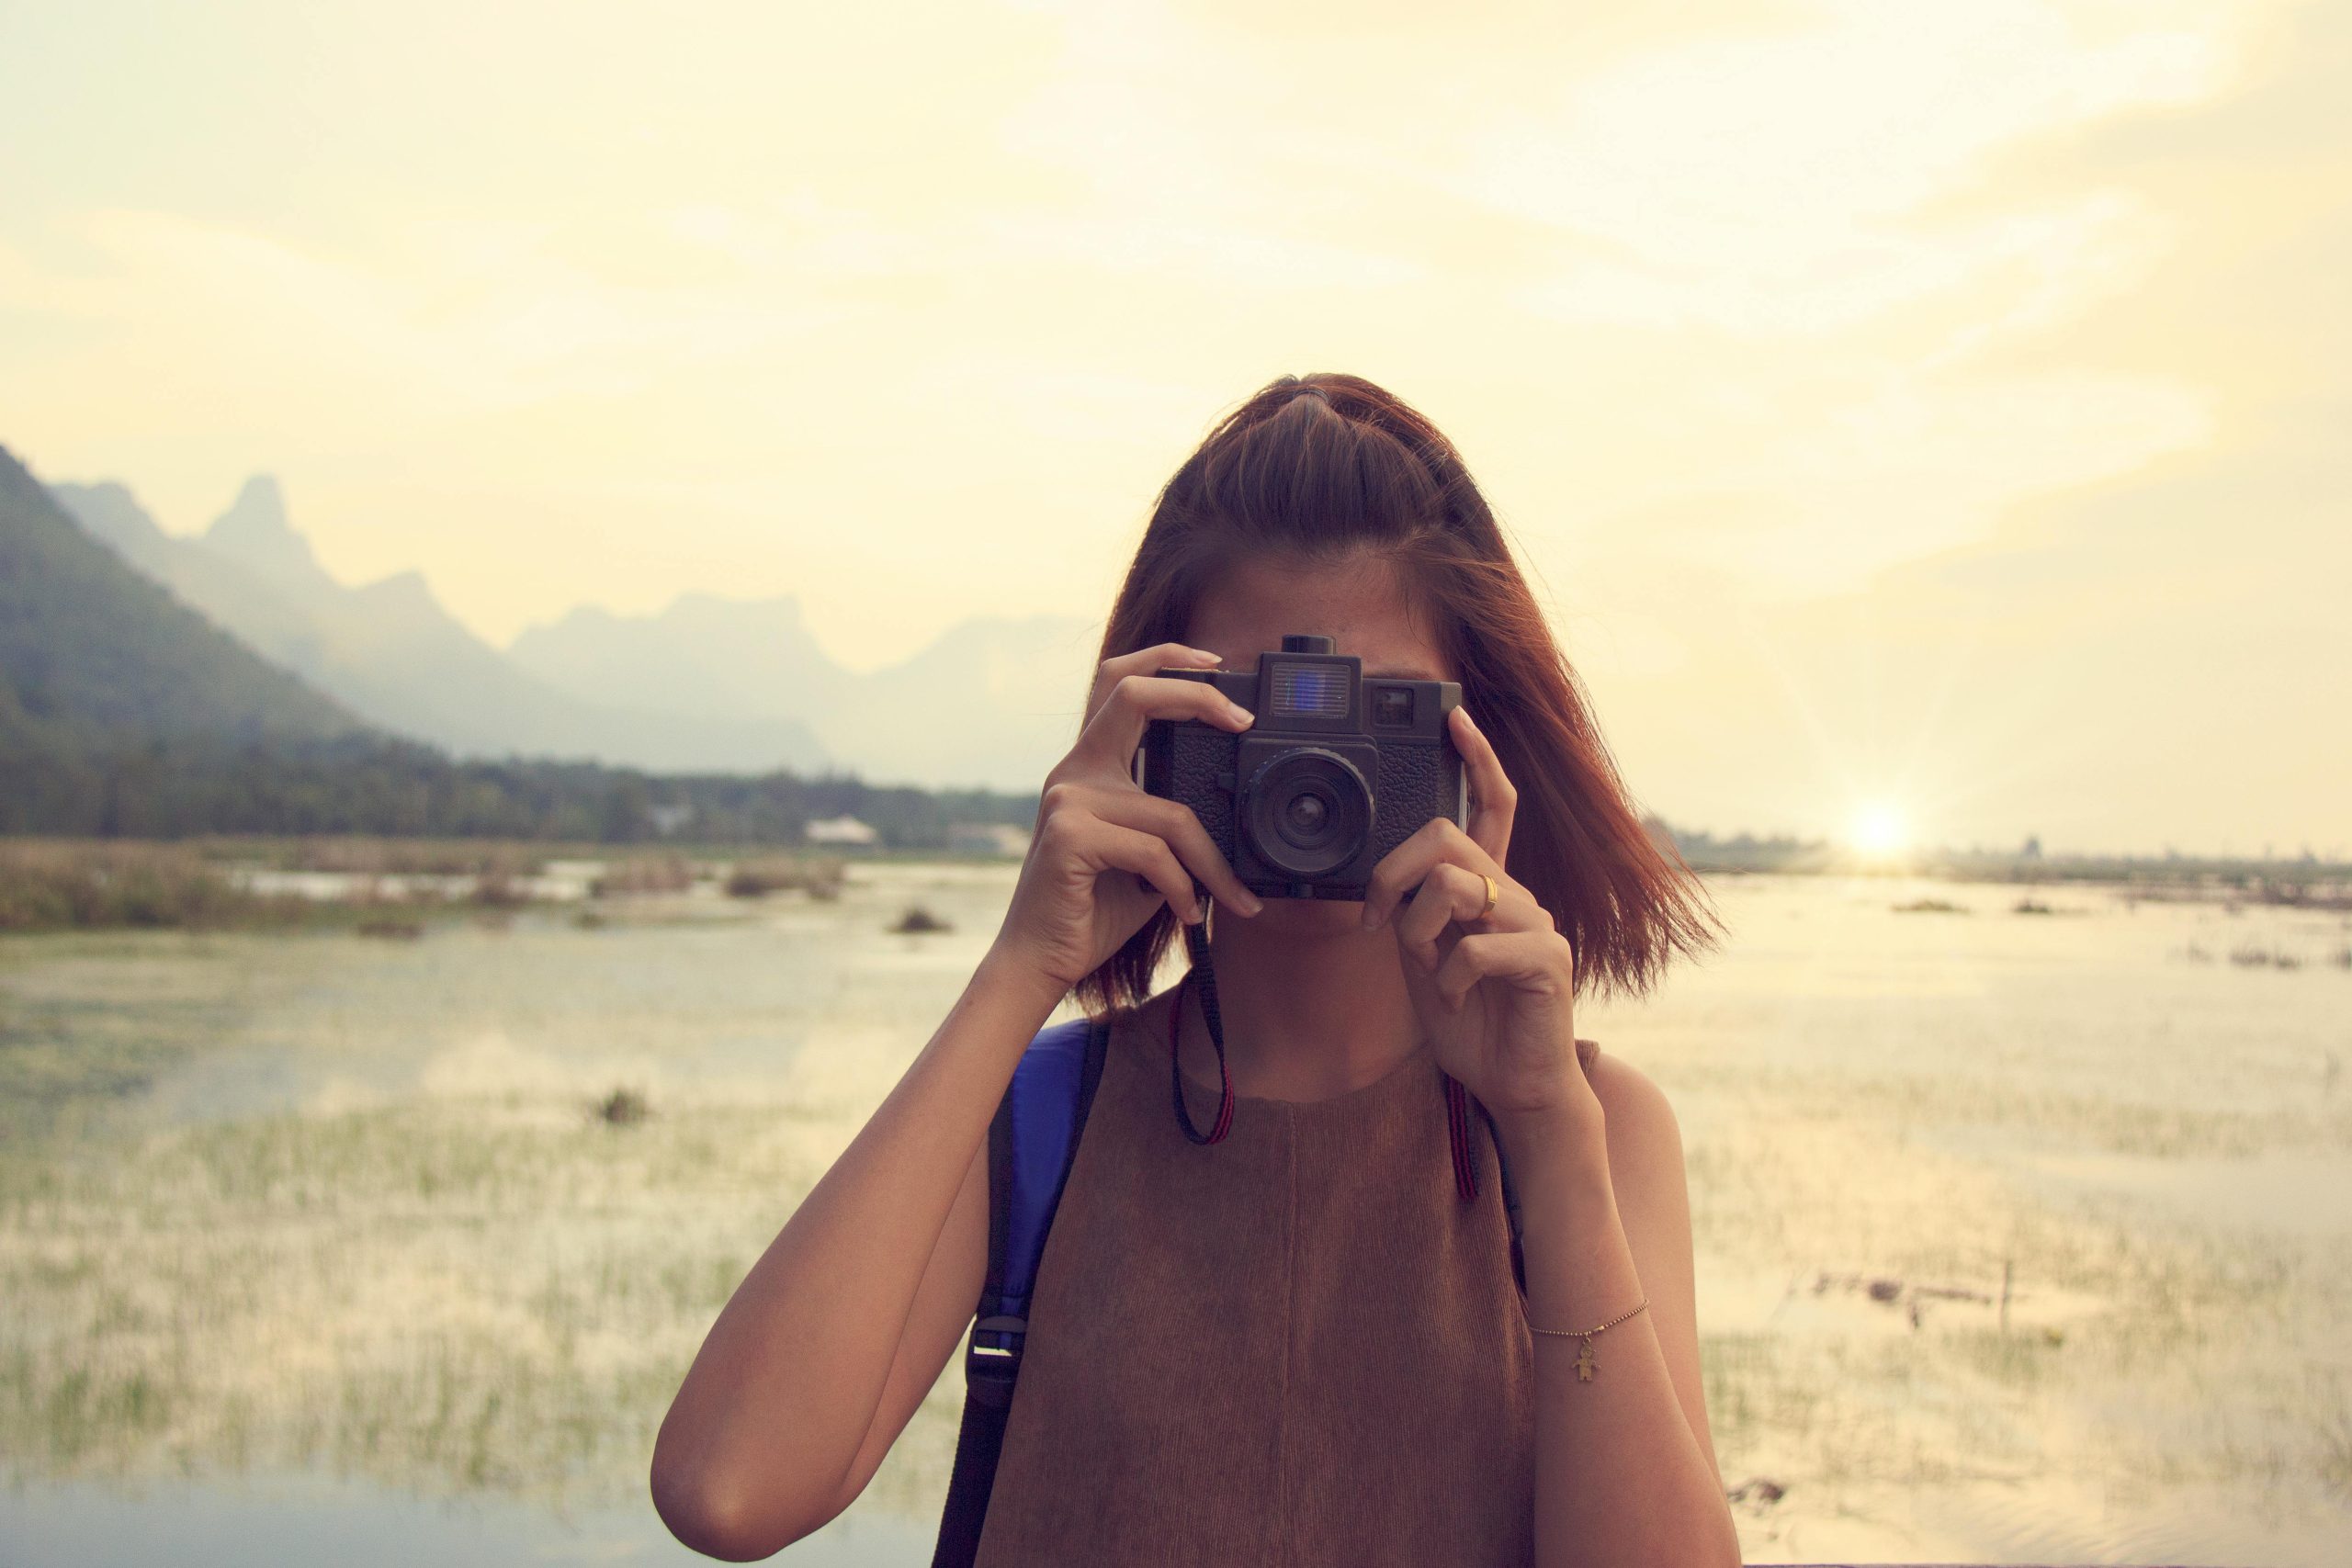 Joven fotógrafa capturando la belleza del paisaje con su cámara.